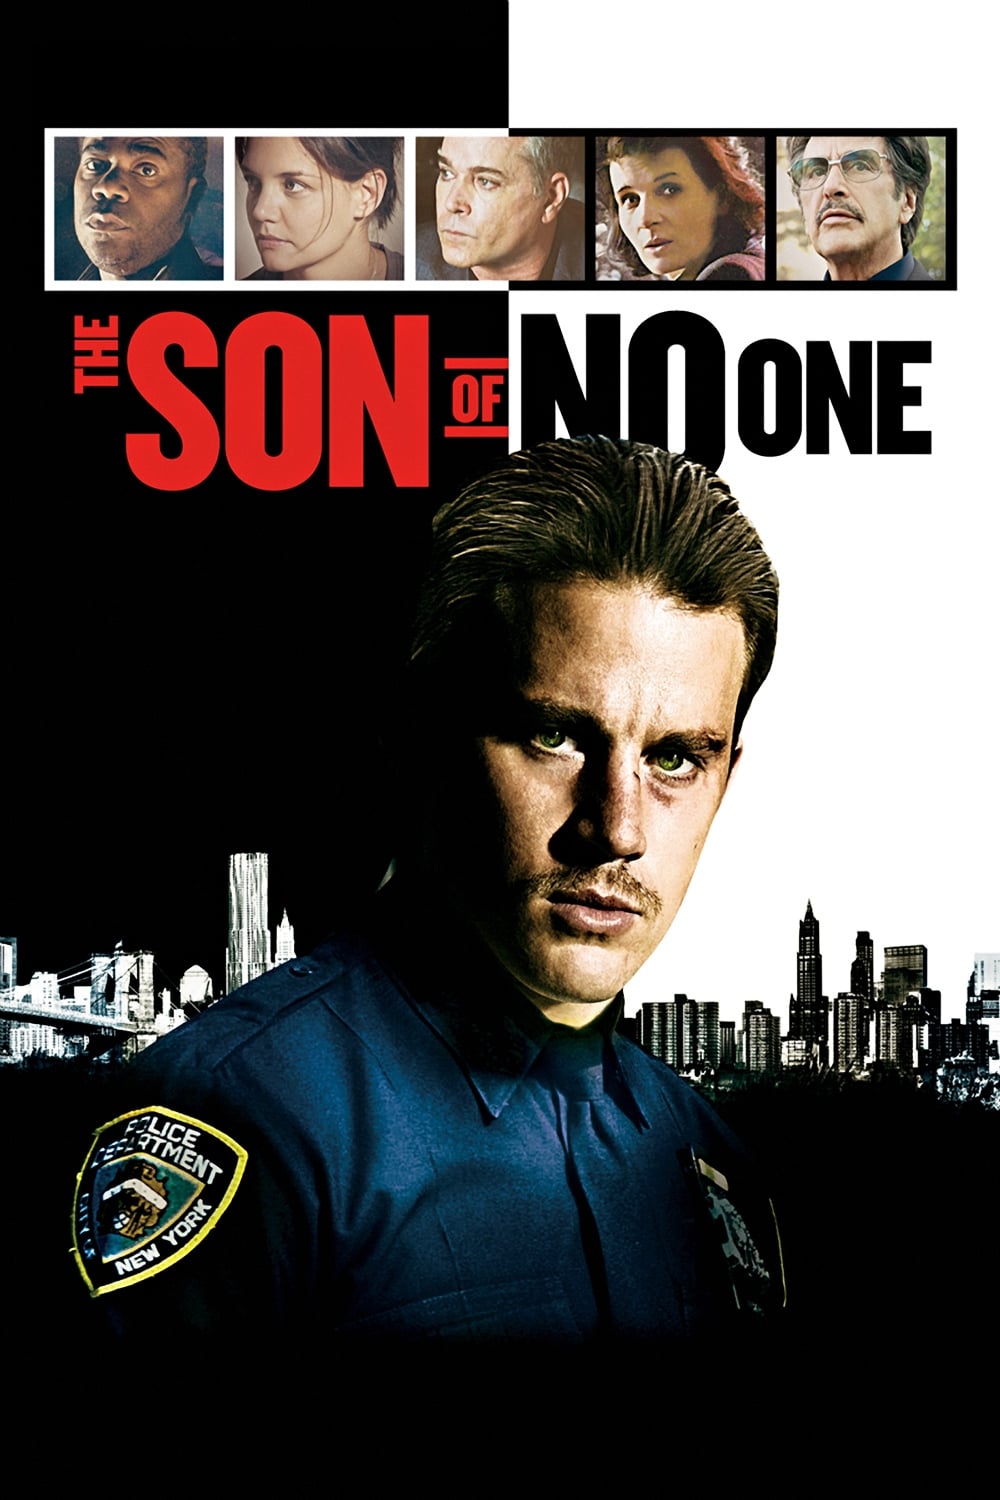 Con Hoang (The Son of No One) [2011]